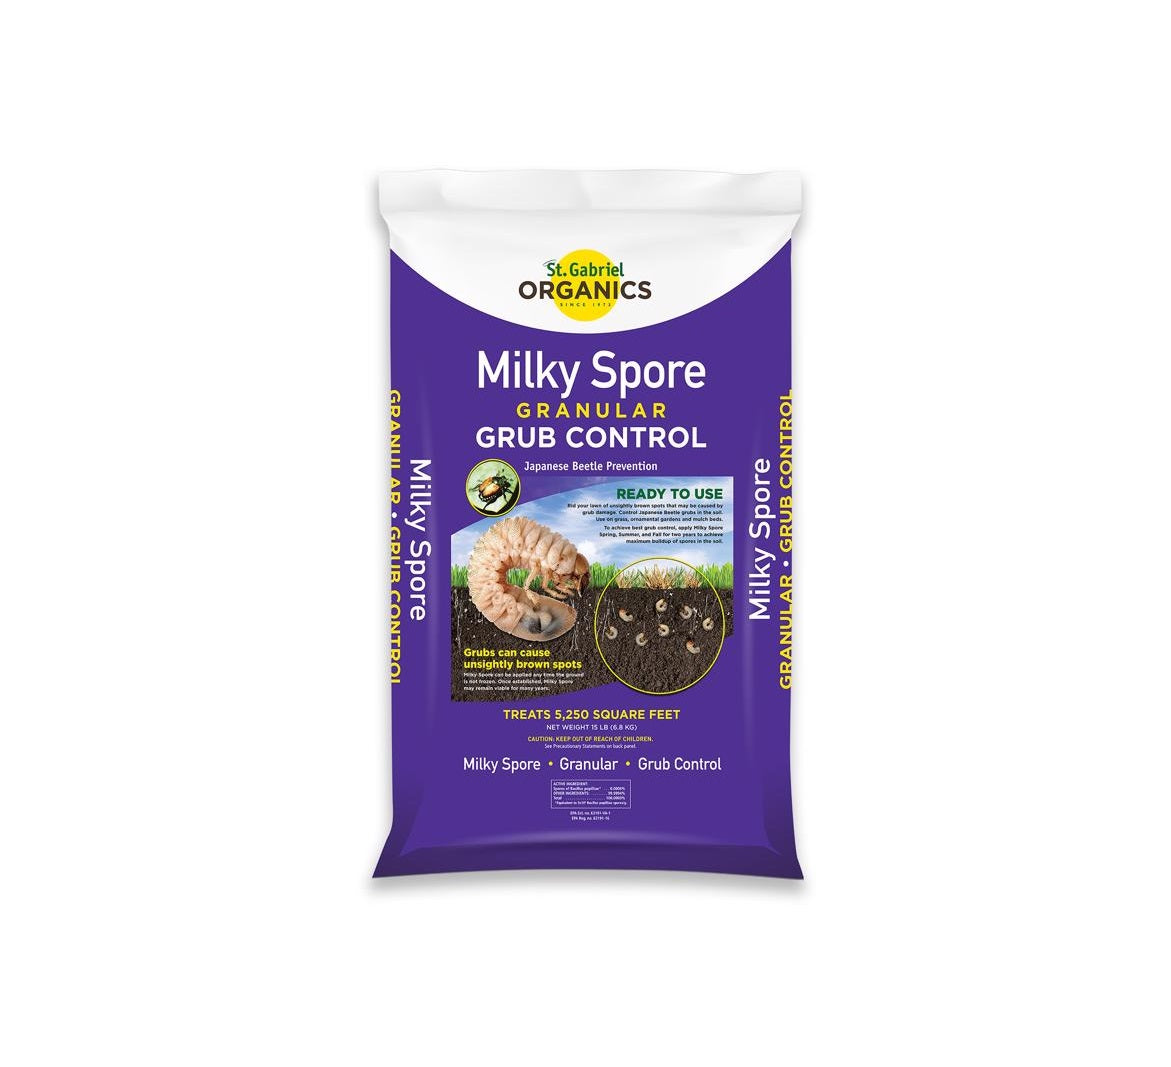 St. Gabriel Organics 80015-4 Milky Spore Granular Grub and Insect Control, 15 Lbs